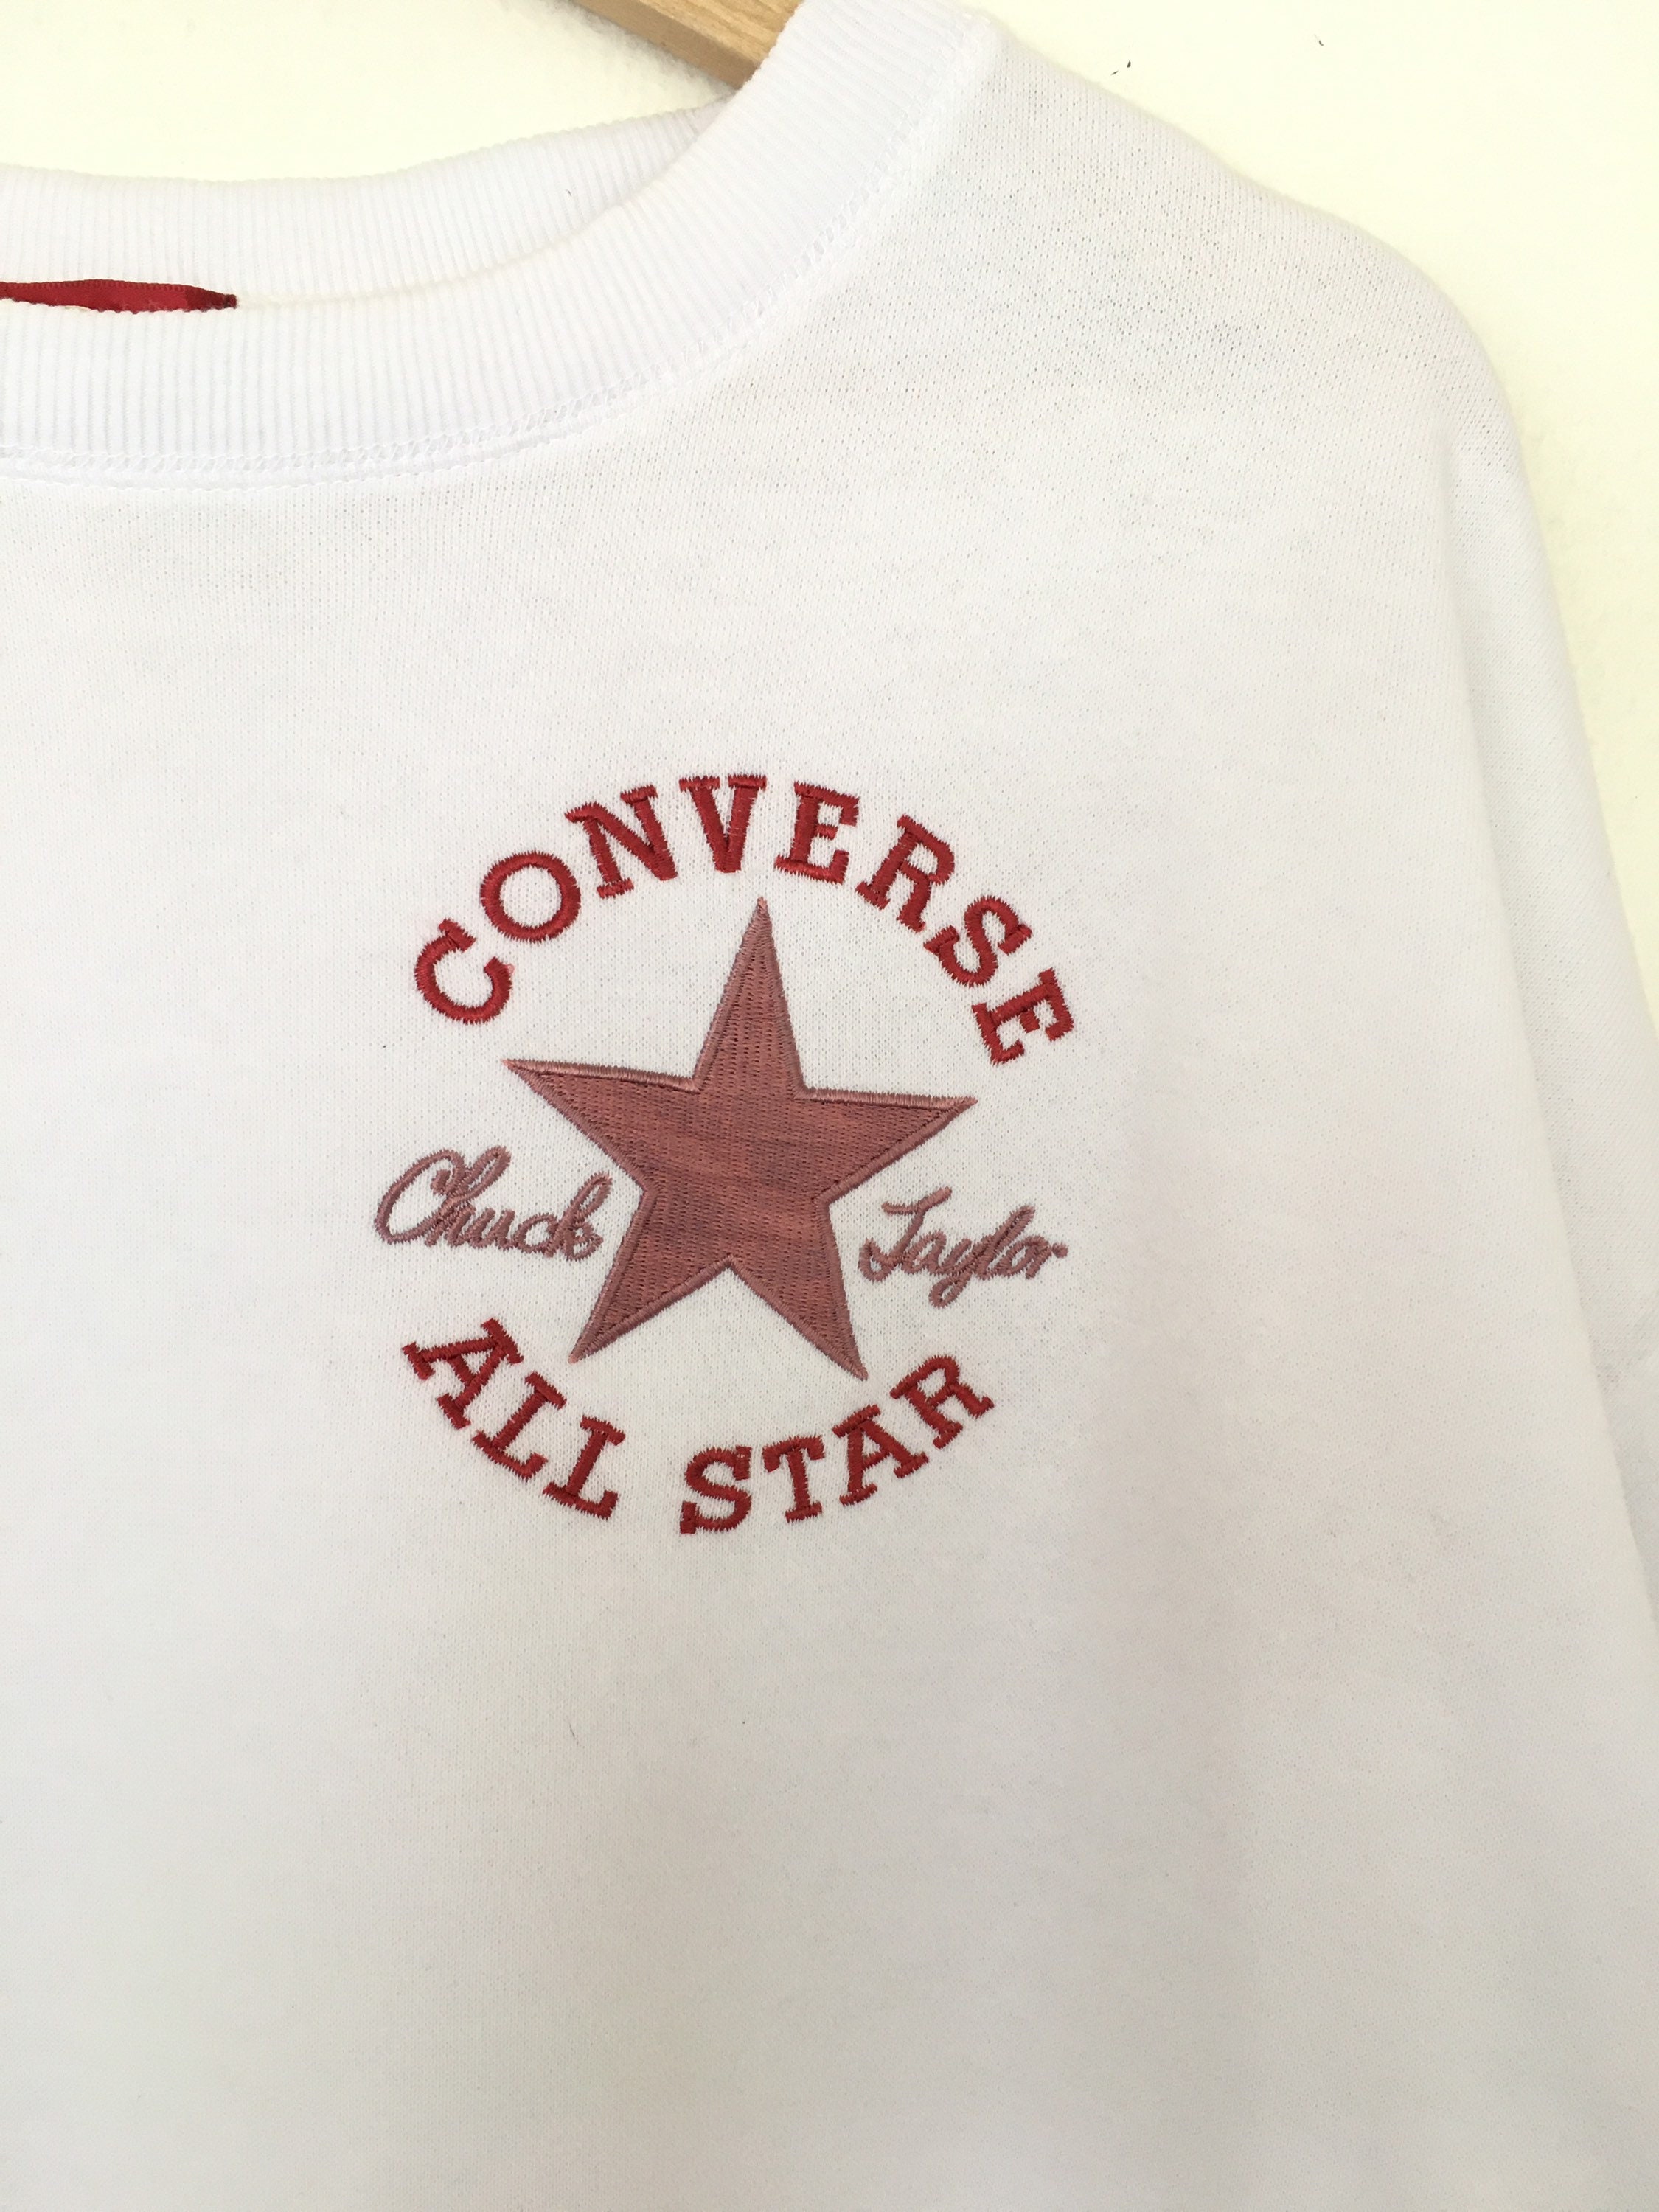 Rare Converse All Star sweatshirt converse all star pullover | Etsy